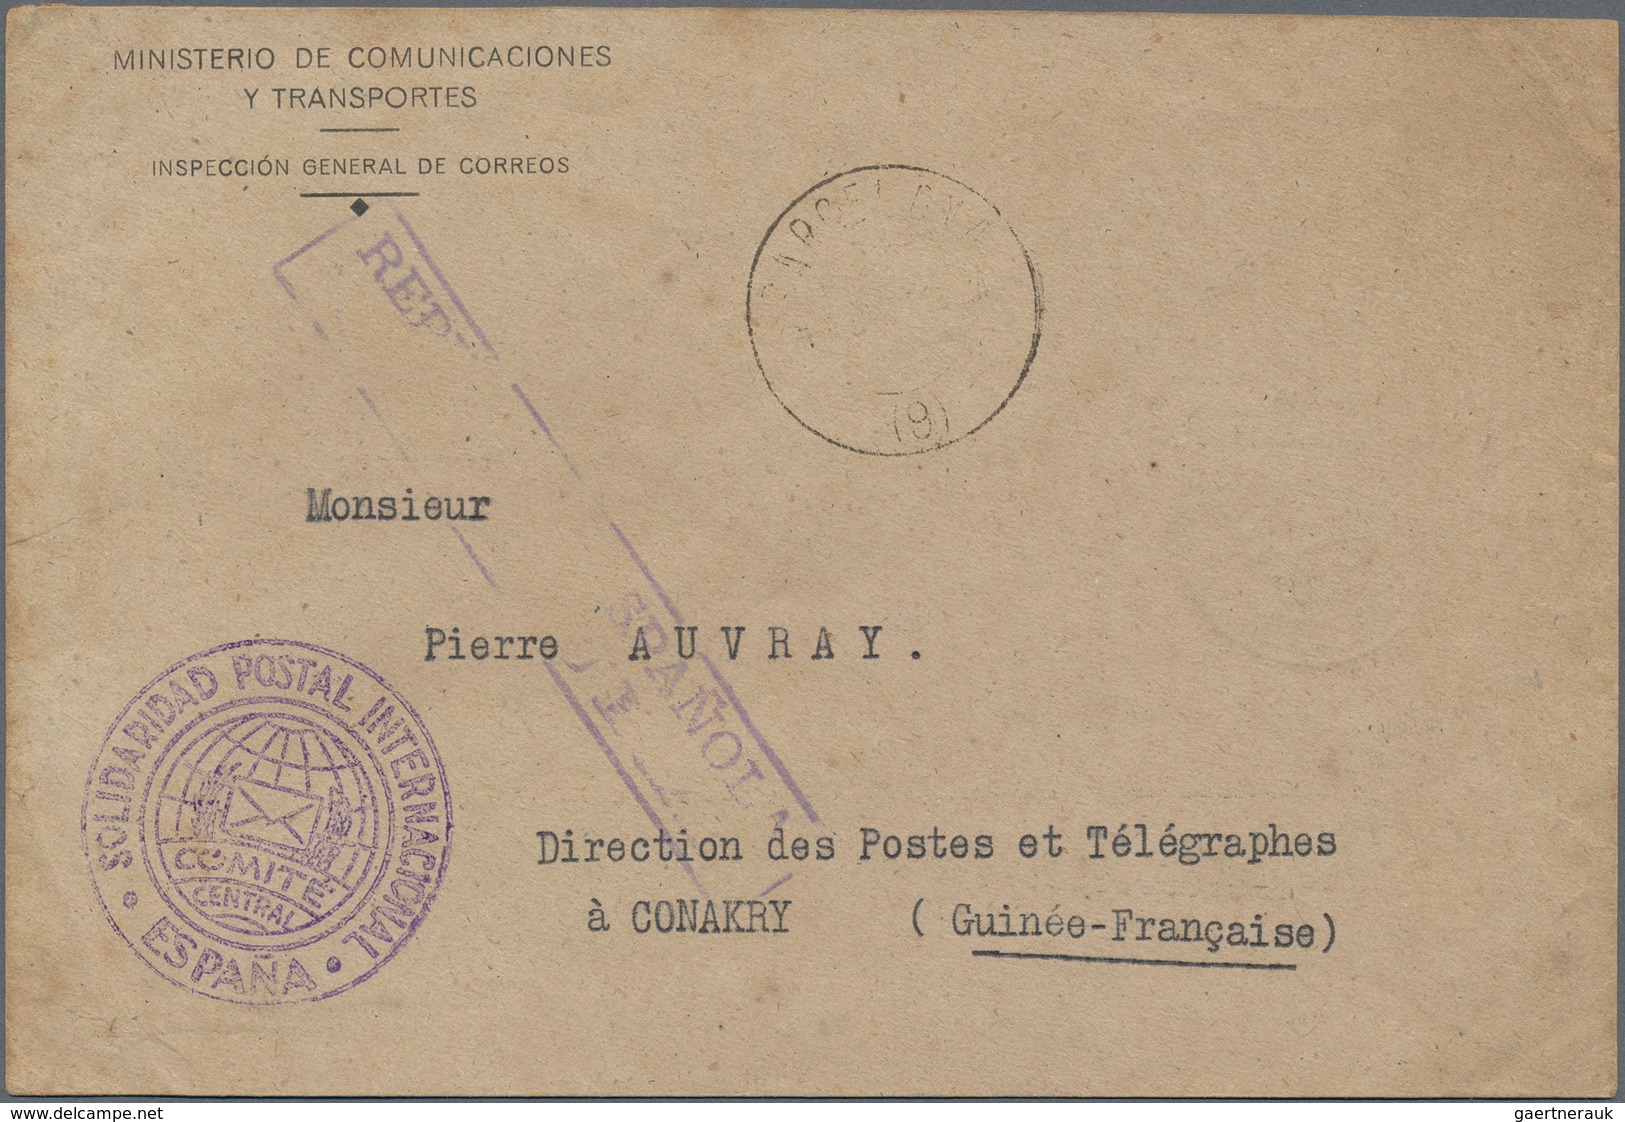 Spanien: 1939: Spain Civil War Cover Sent POSTAGE FREE From The "Ministerio De Comunicaciones Y Tran - Gebraucht